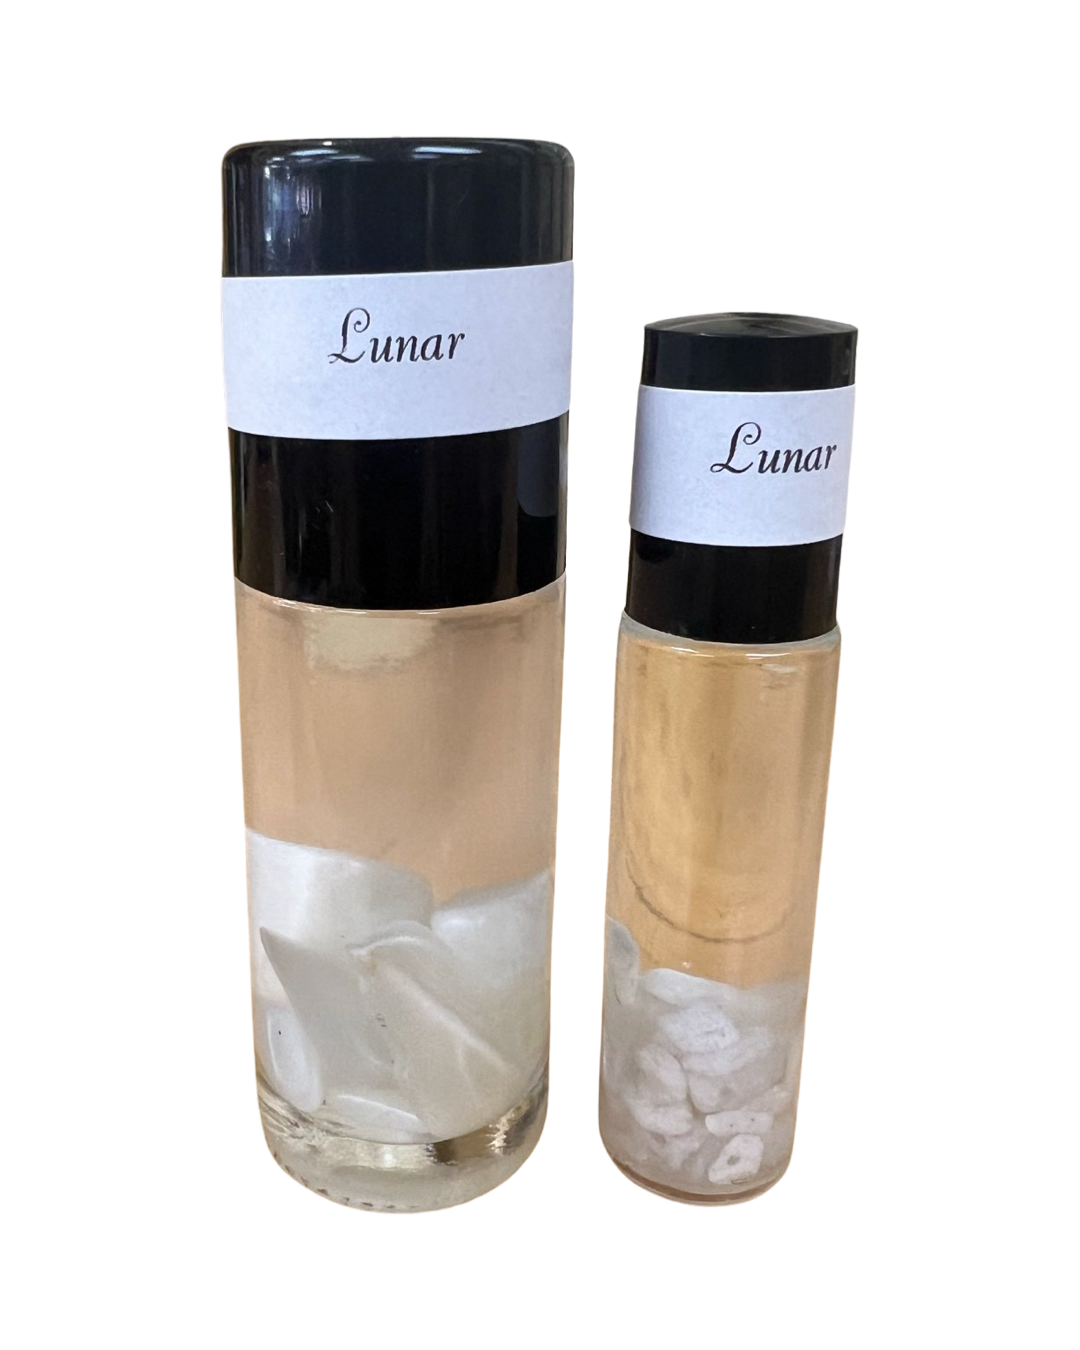 Lunar Crystal Infused Body Oil